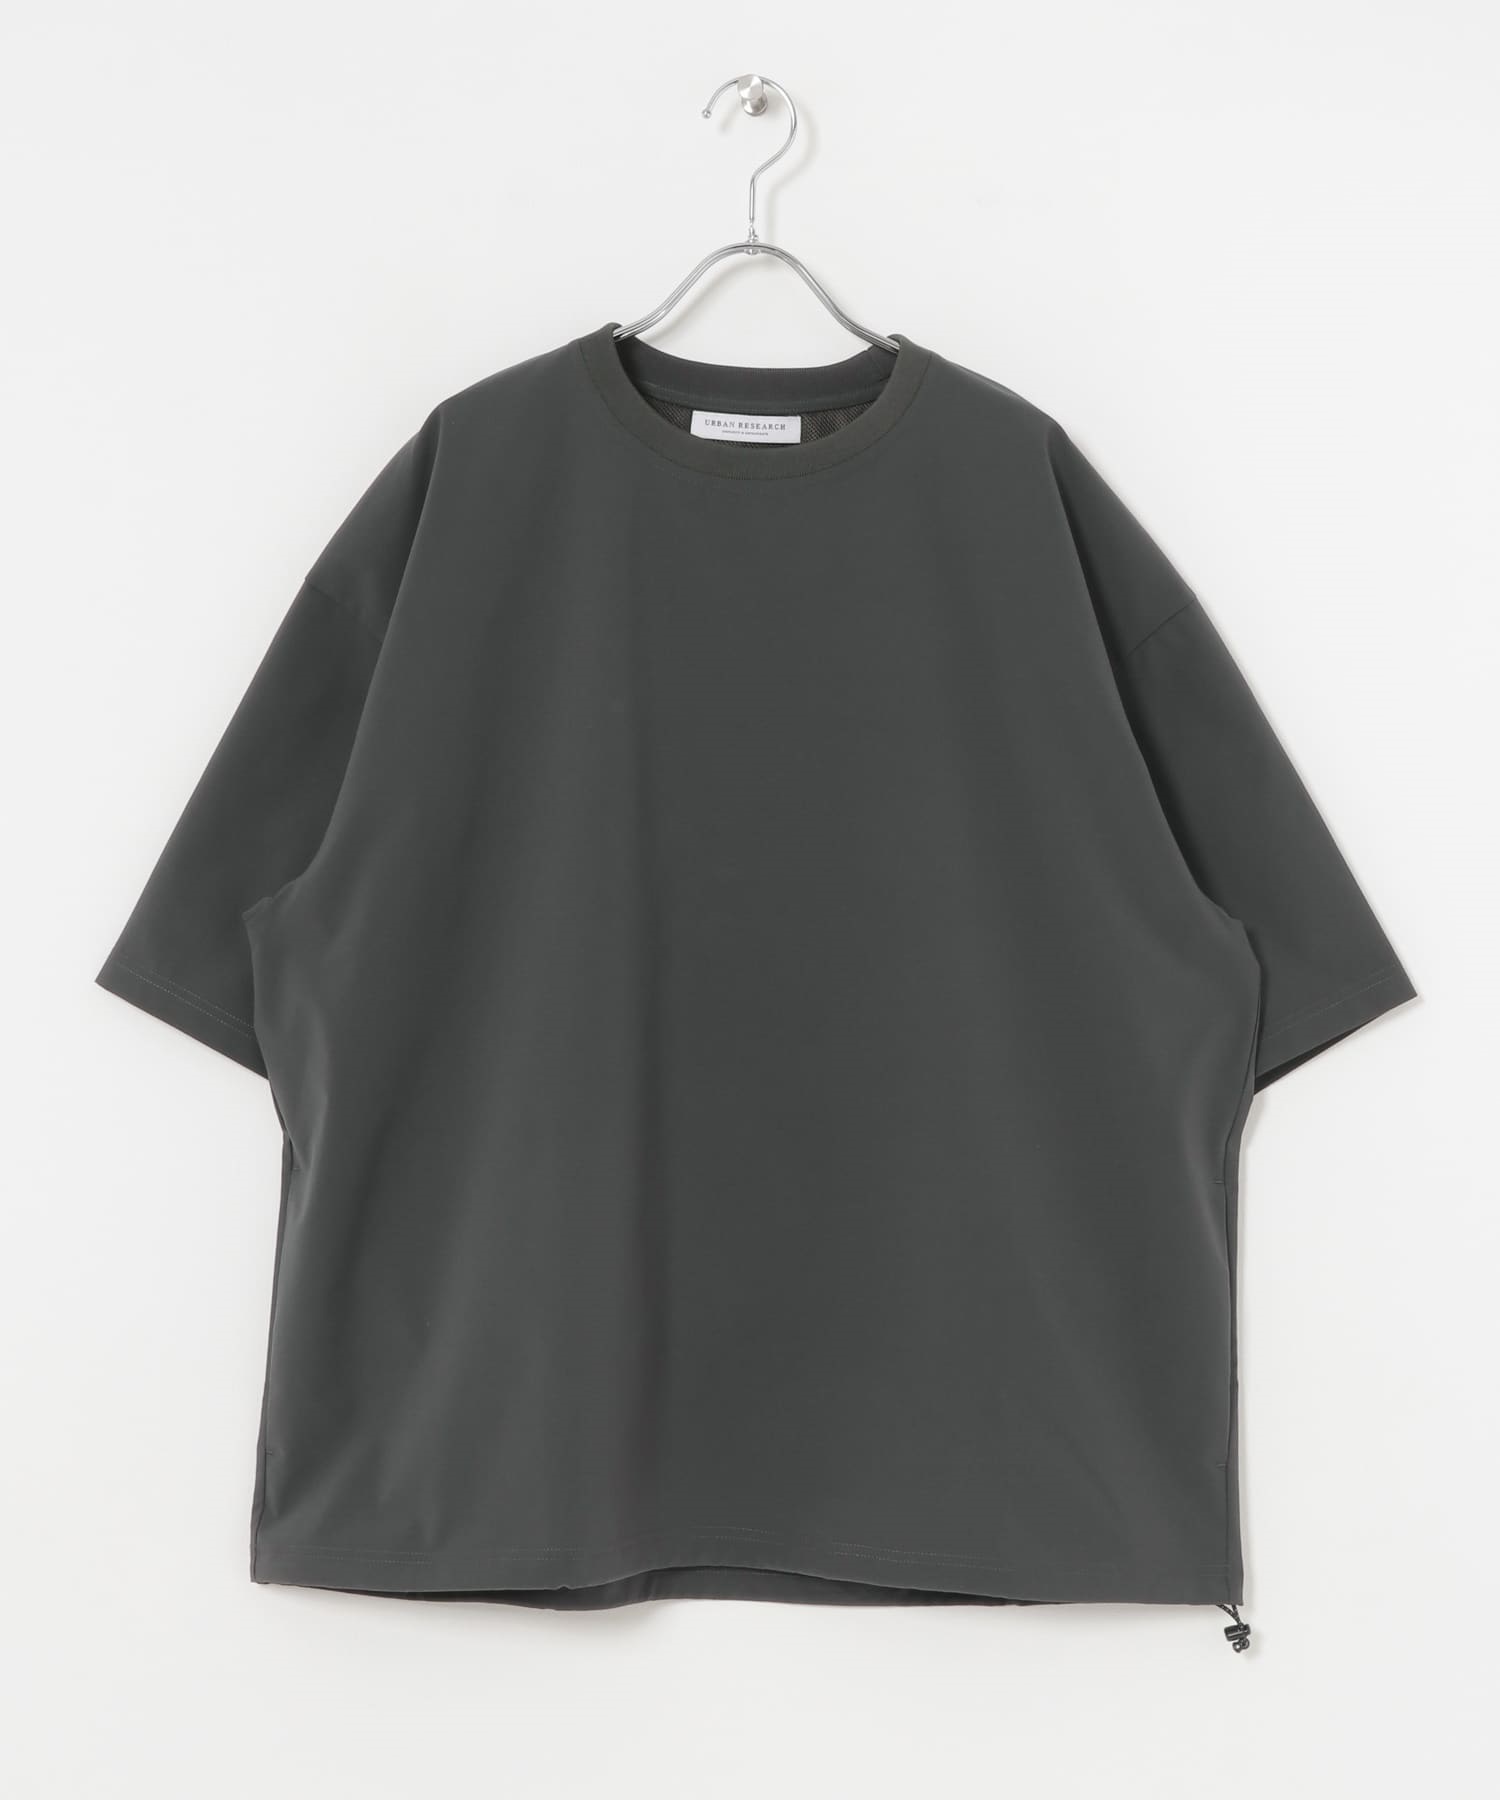 SOLOTEX® 高機能短袖T恤(炭灰色-M-CHARCOAL GRAY)